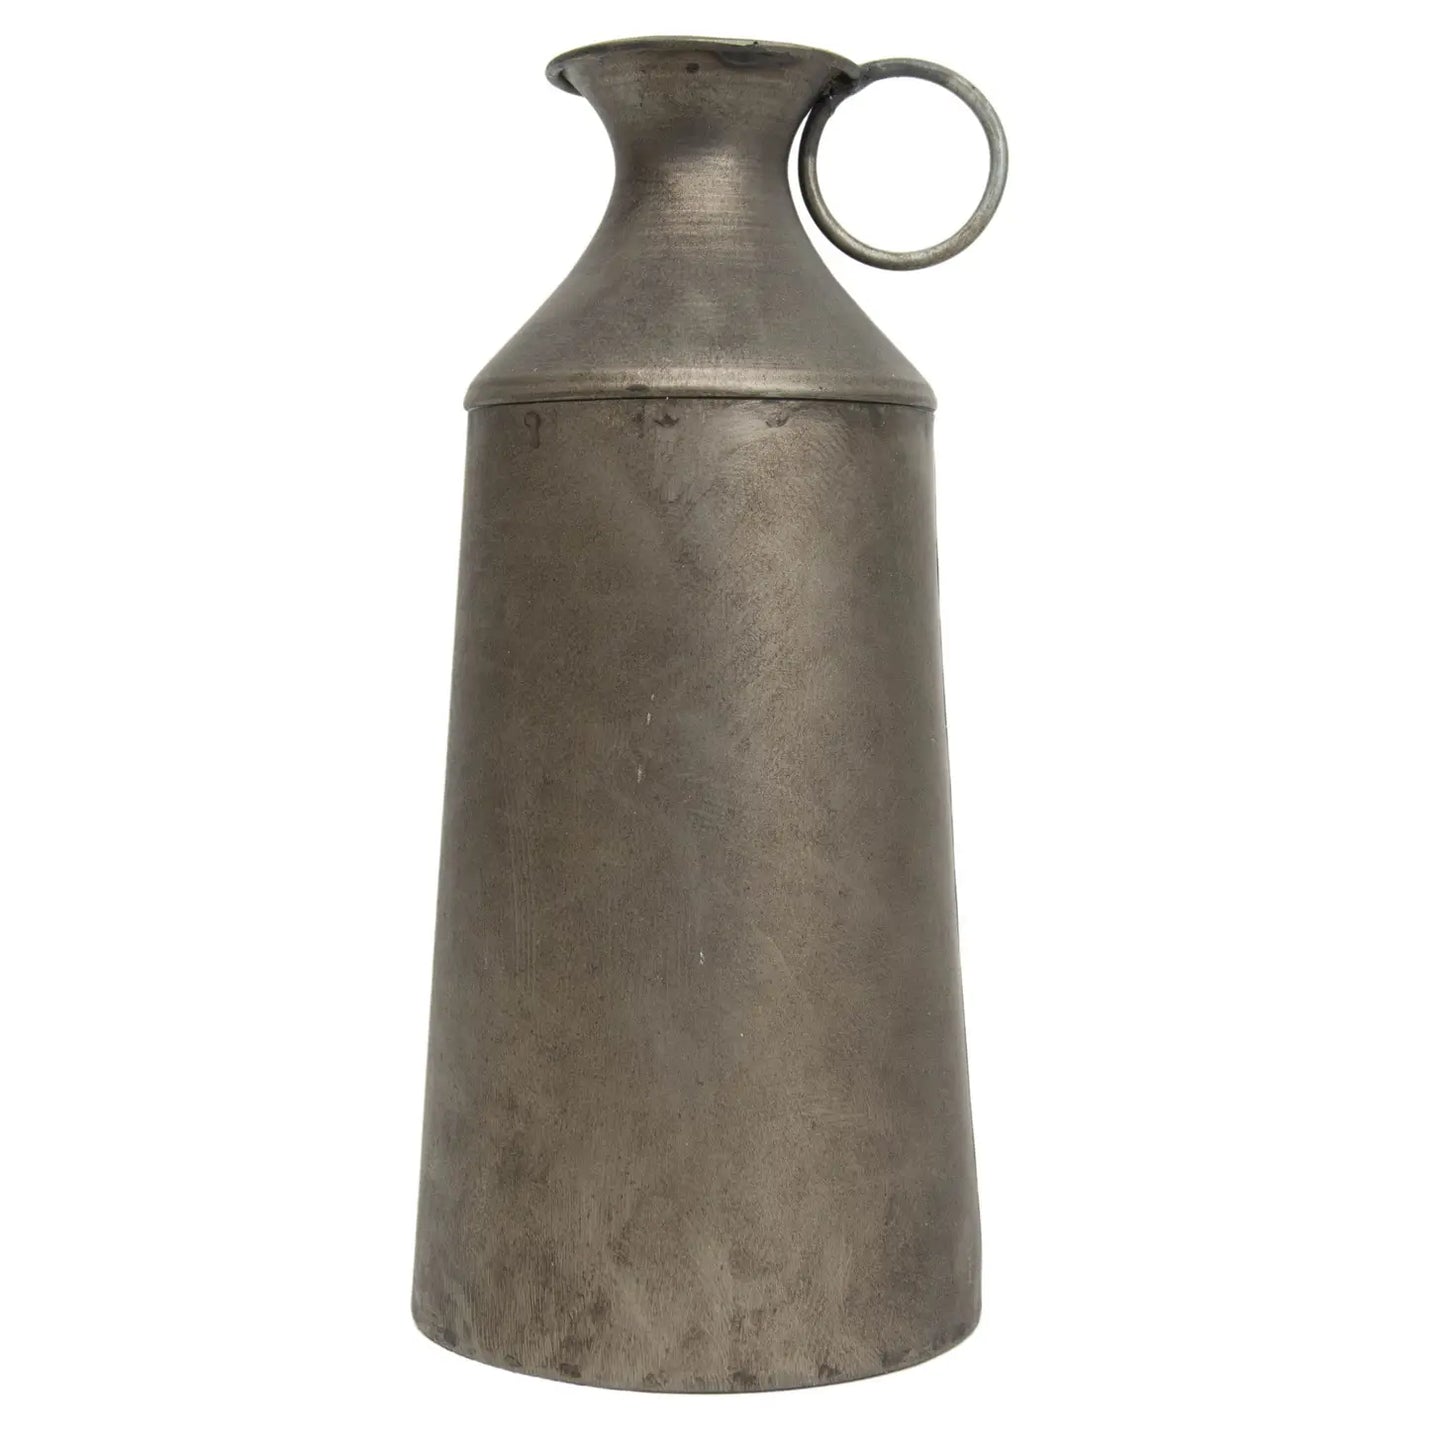 Galvanized vase pitcher